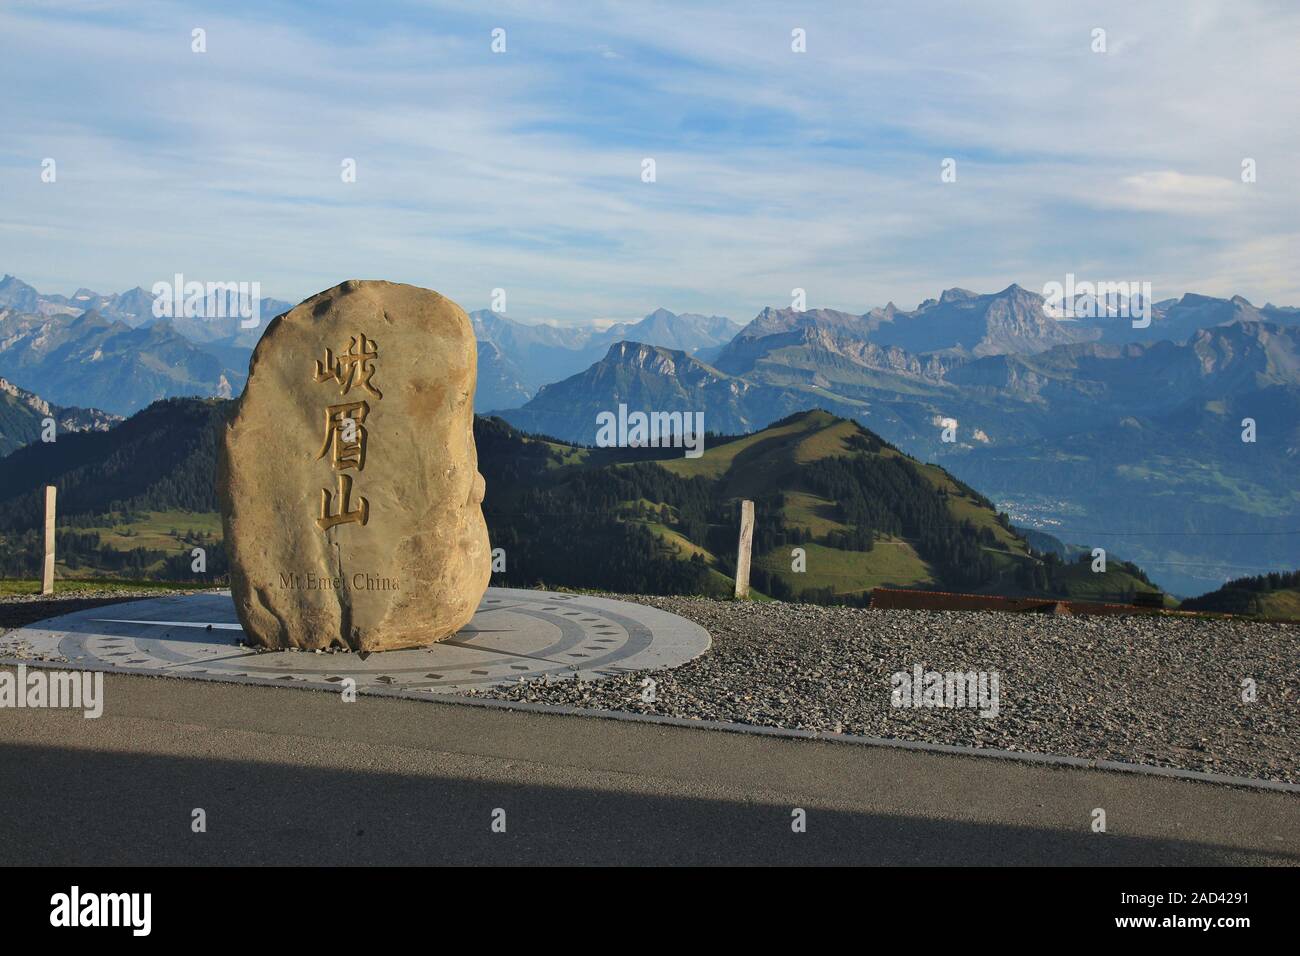 Rock of mount Emei on the top of mount Rigi, Switzerland. Stock Photo